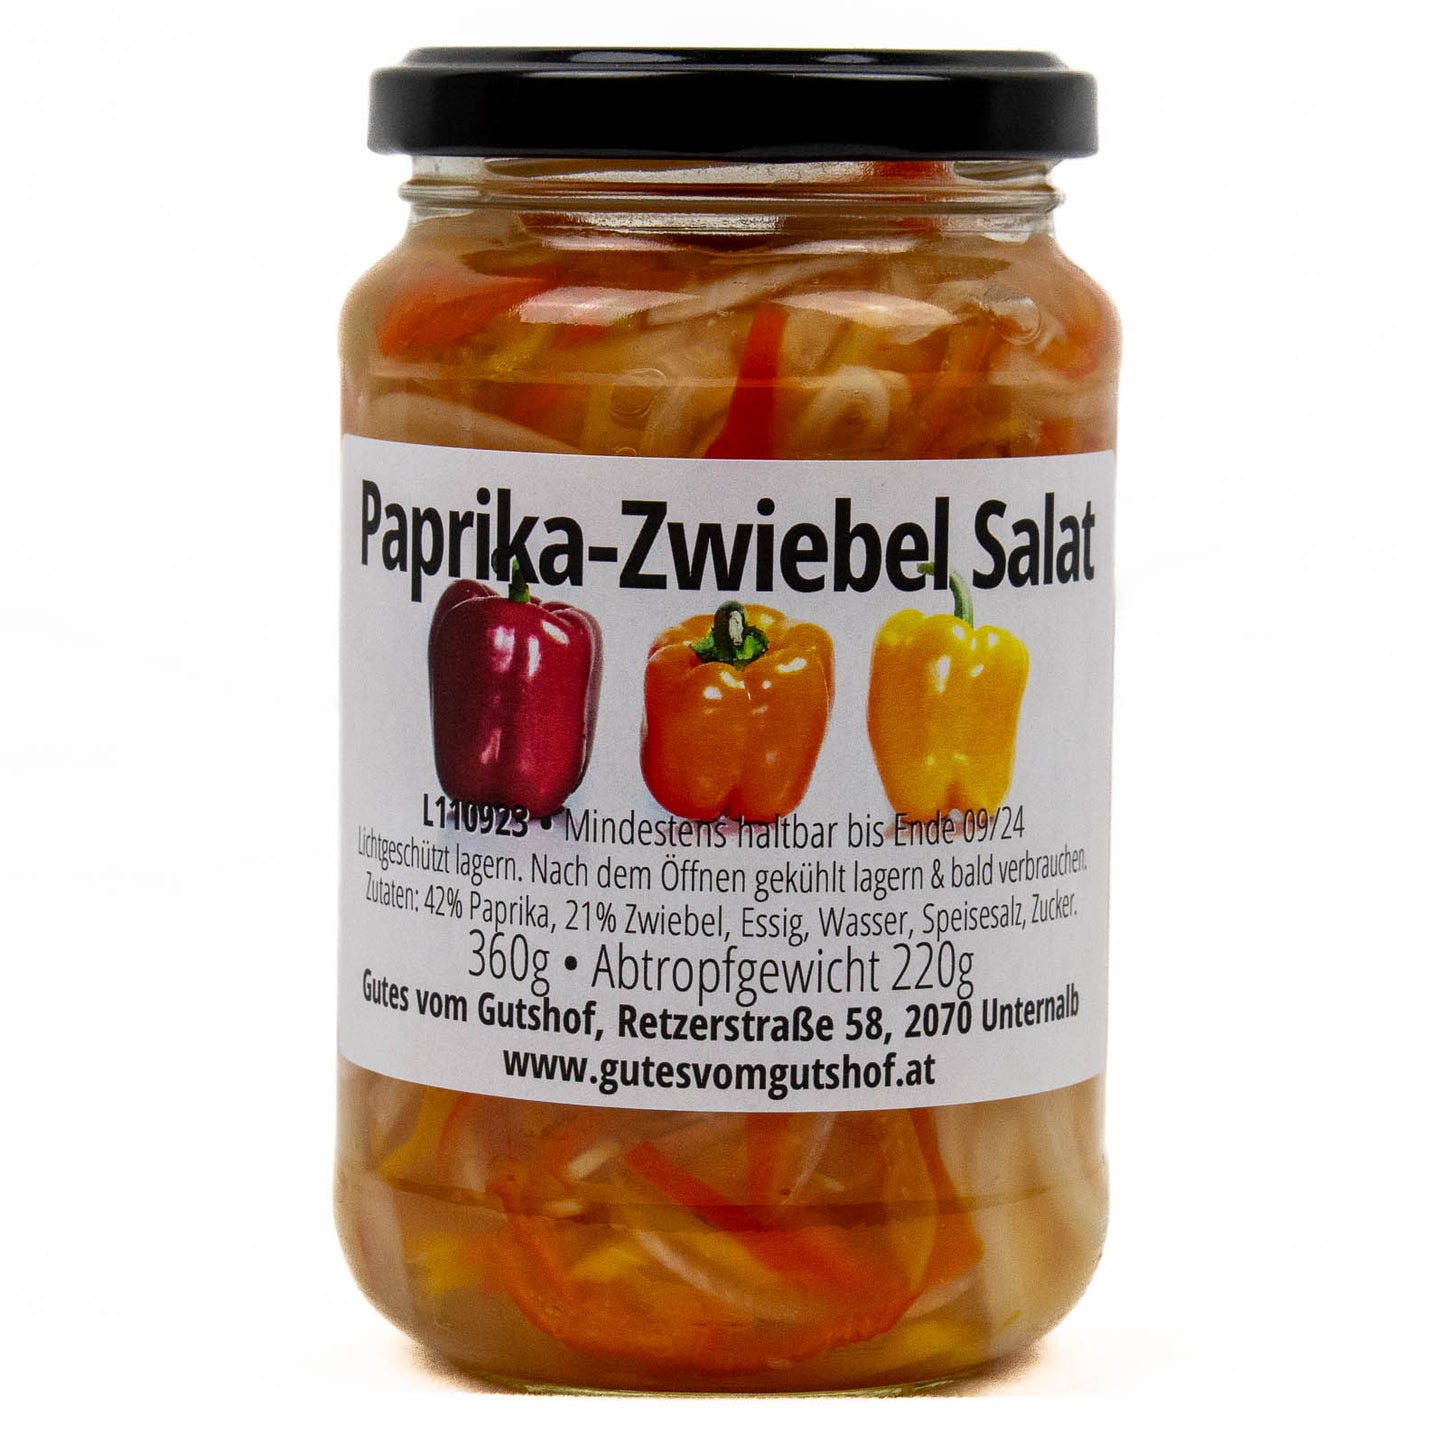 Paprika-Zwiebel Salat 360g | Abtropfgewicht 220g